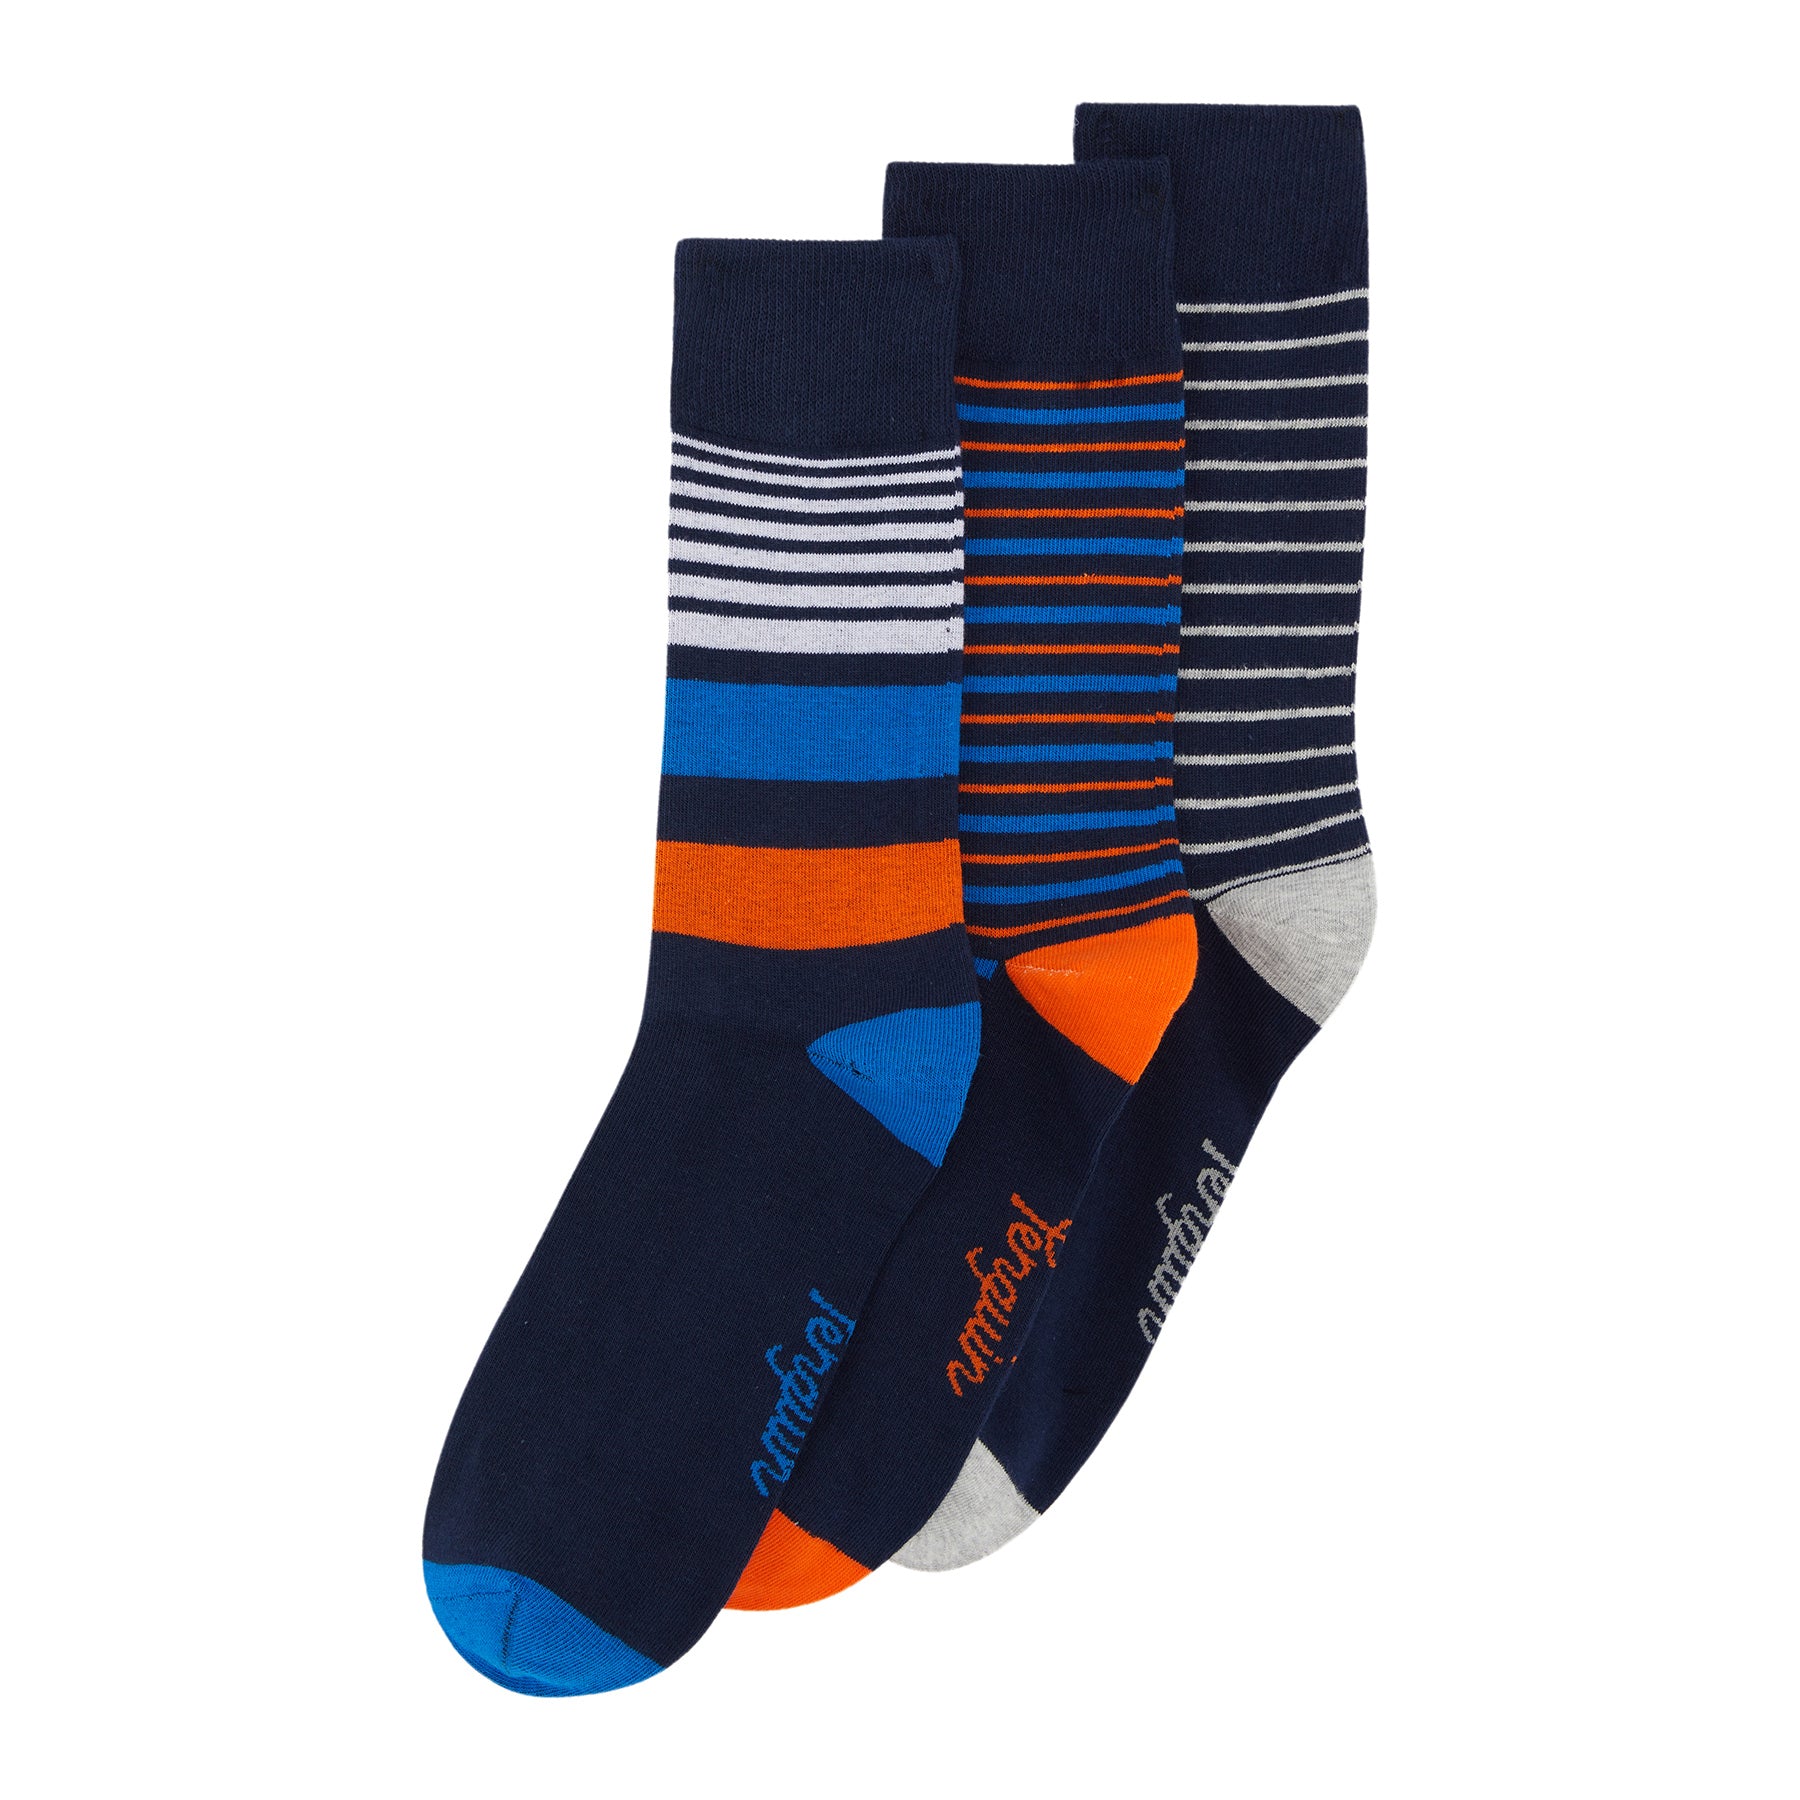 View 3 Pack Stripe Design Ankle Socks In Navy Blue And Orange information